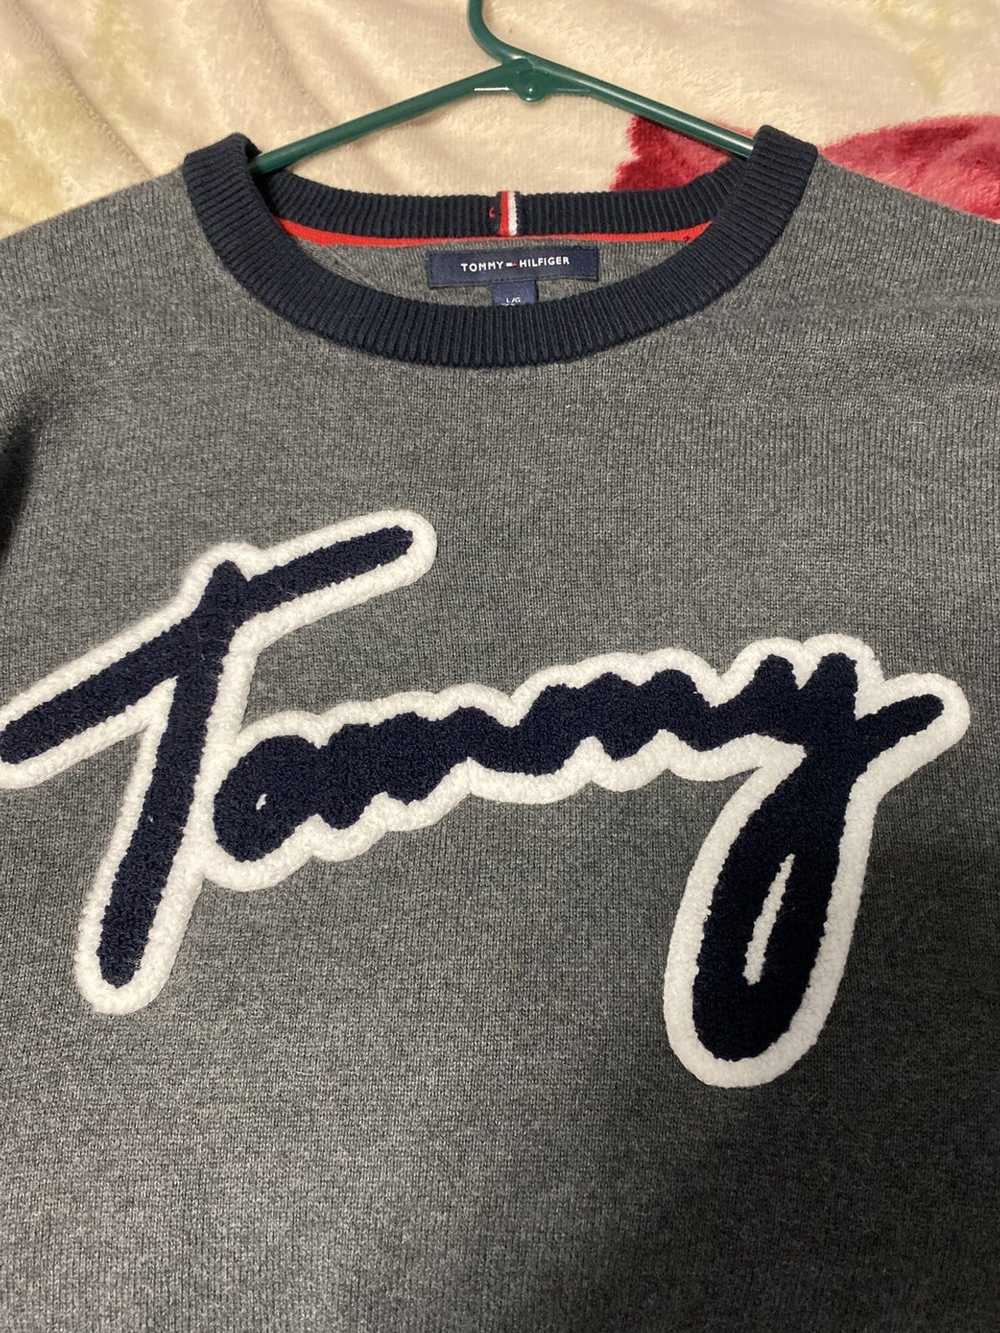 Tommy Hilfiger Tommy Hilfiger sweater - image 2